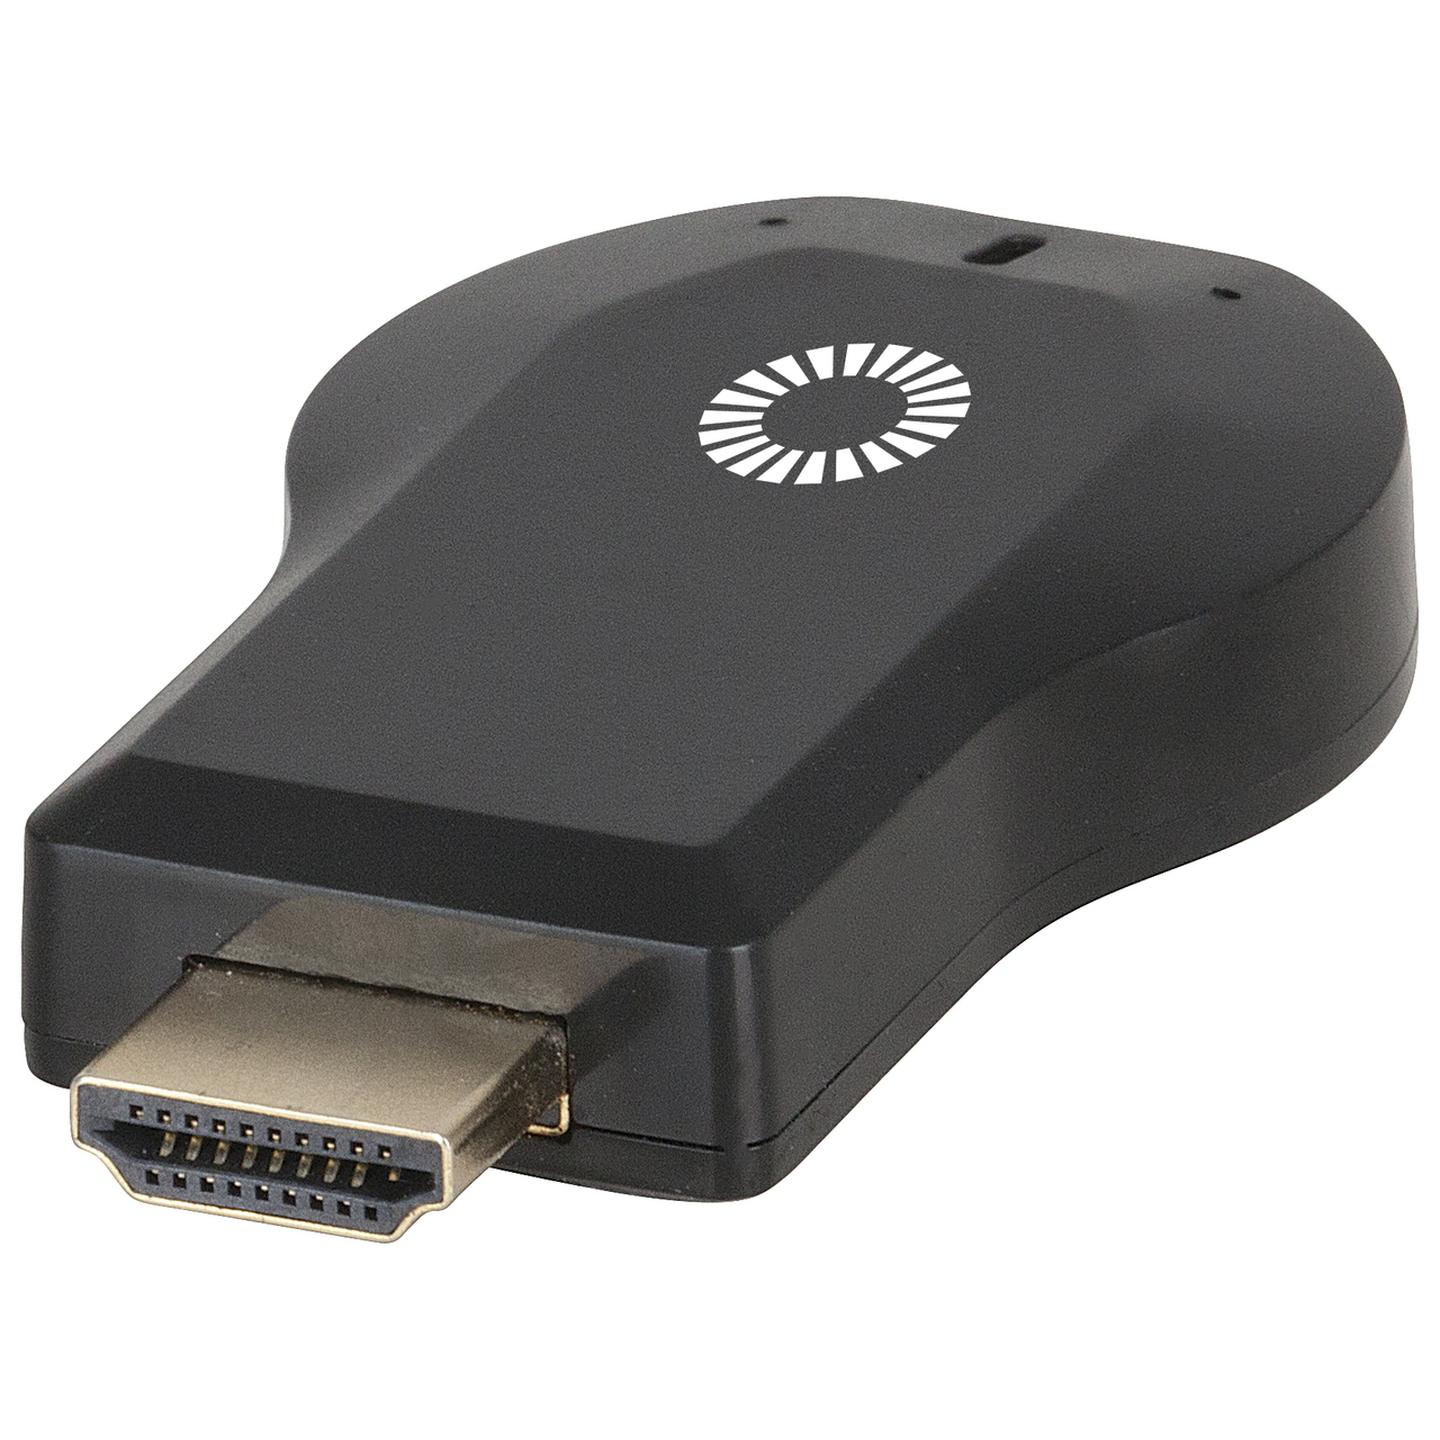 Digitech Wi-Fi HDMI Miracast Dongle V2.0